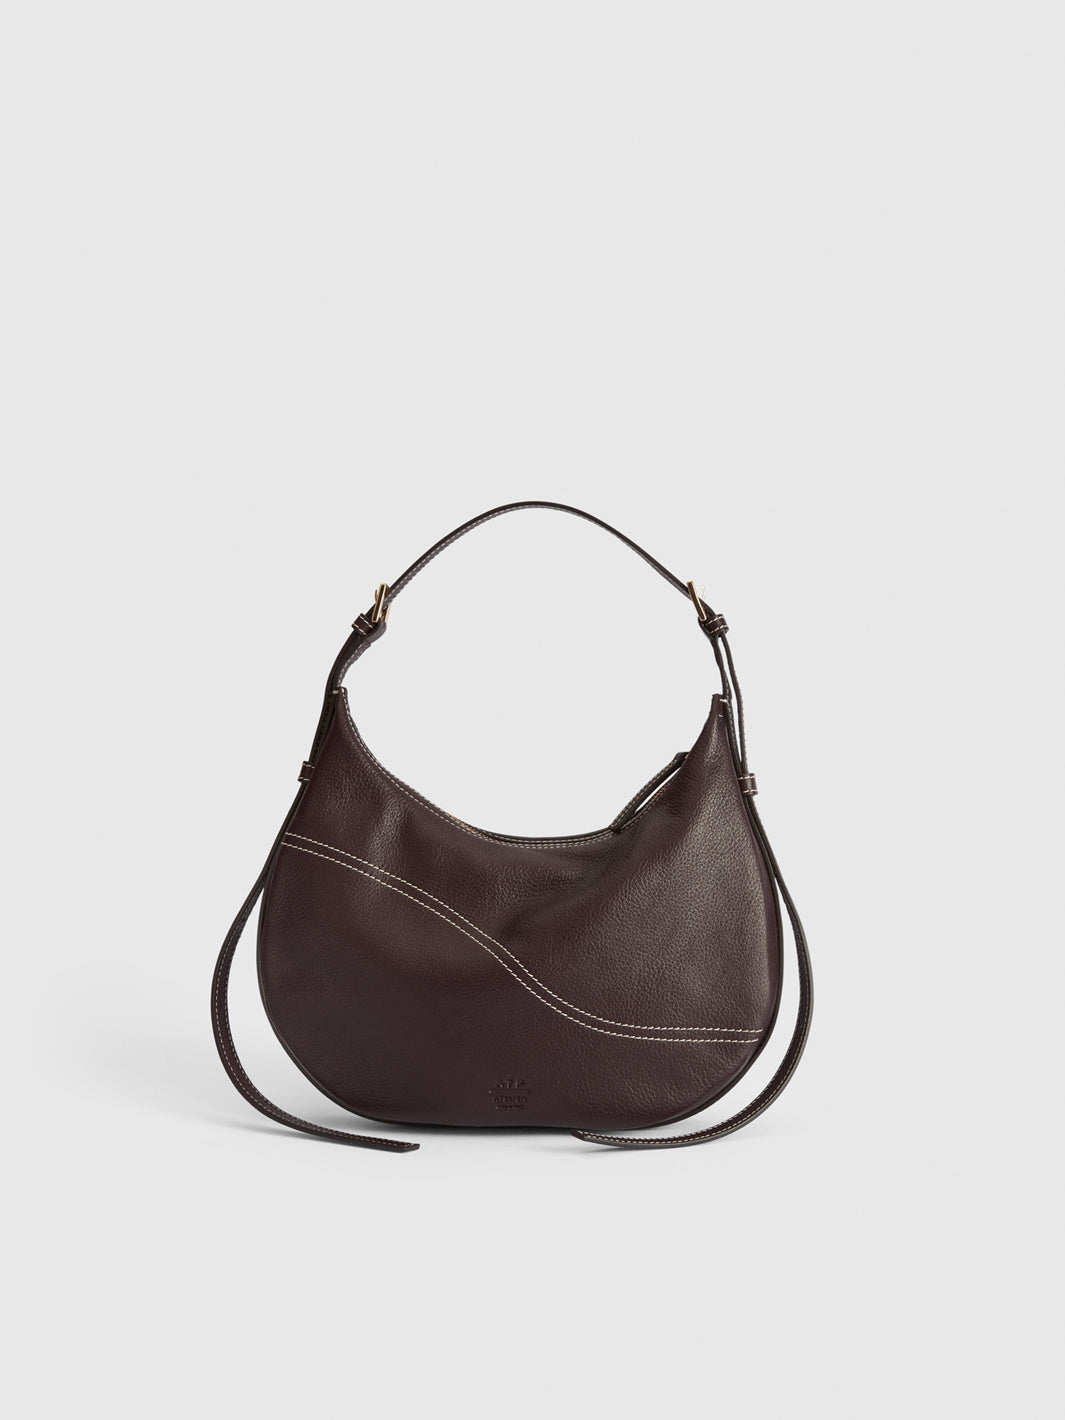 Liveri Walnut/Contrast Stitch Grained Leather Small hobo bag